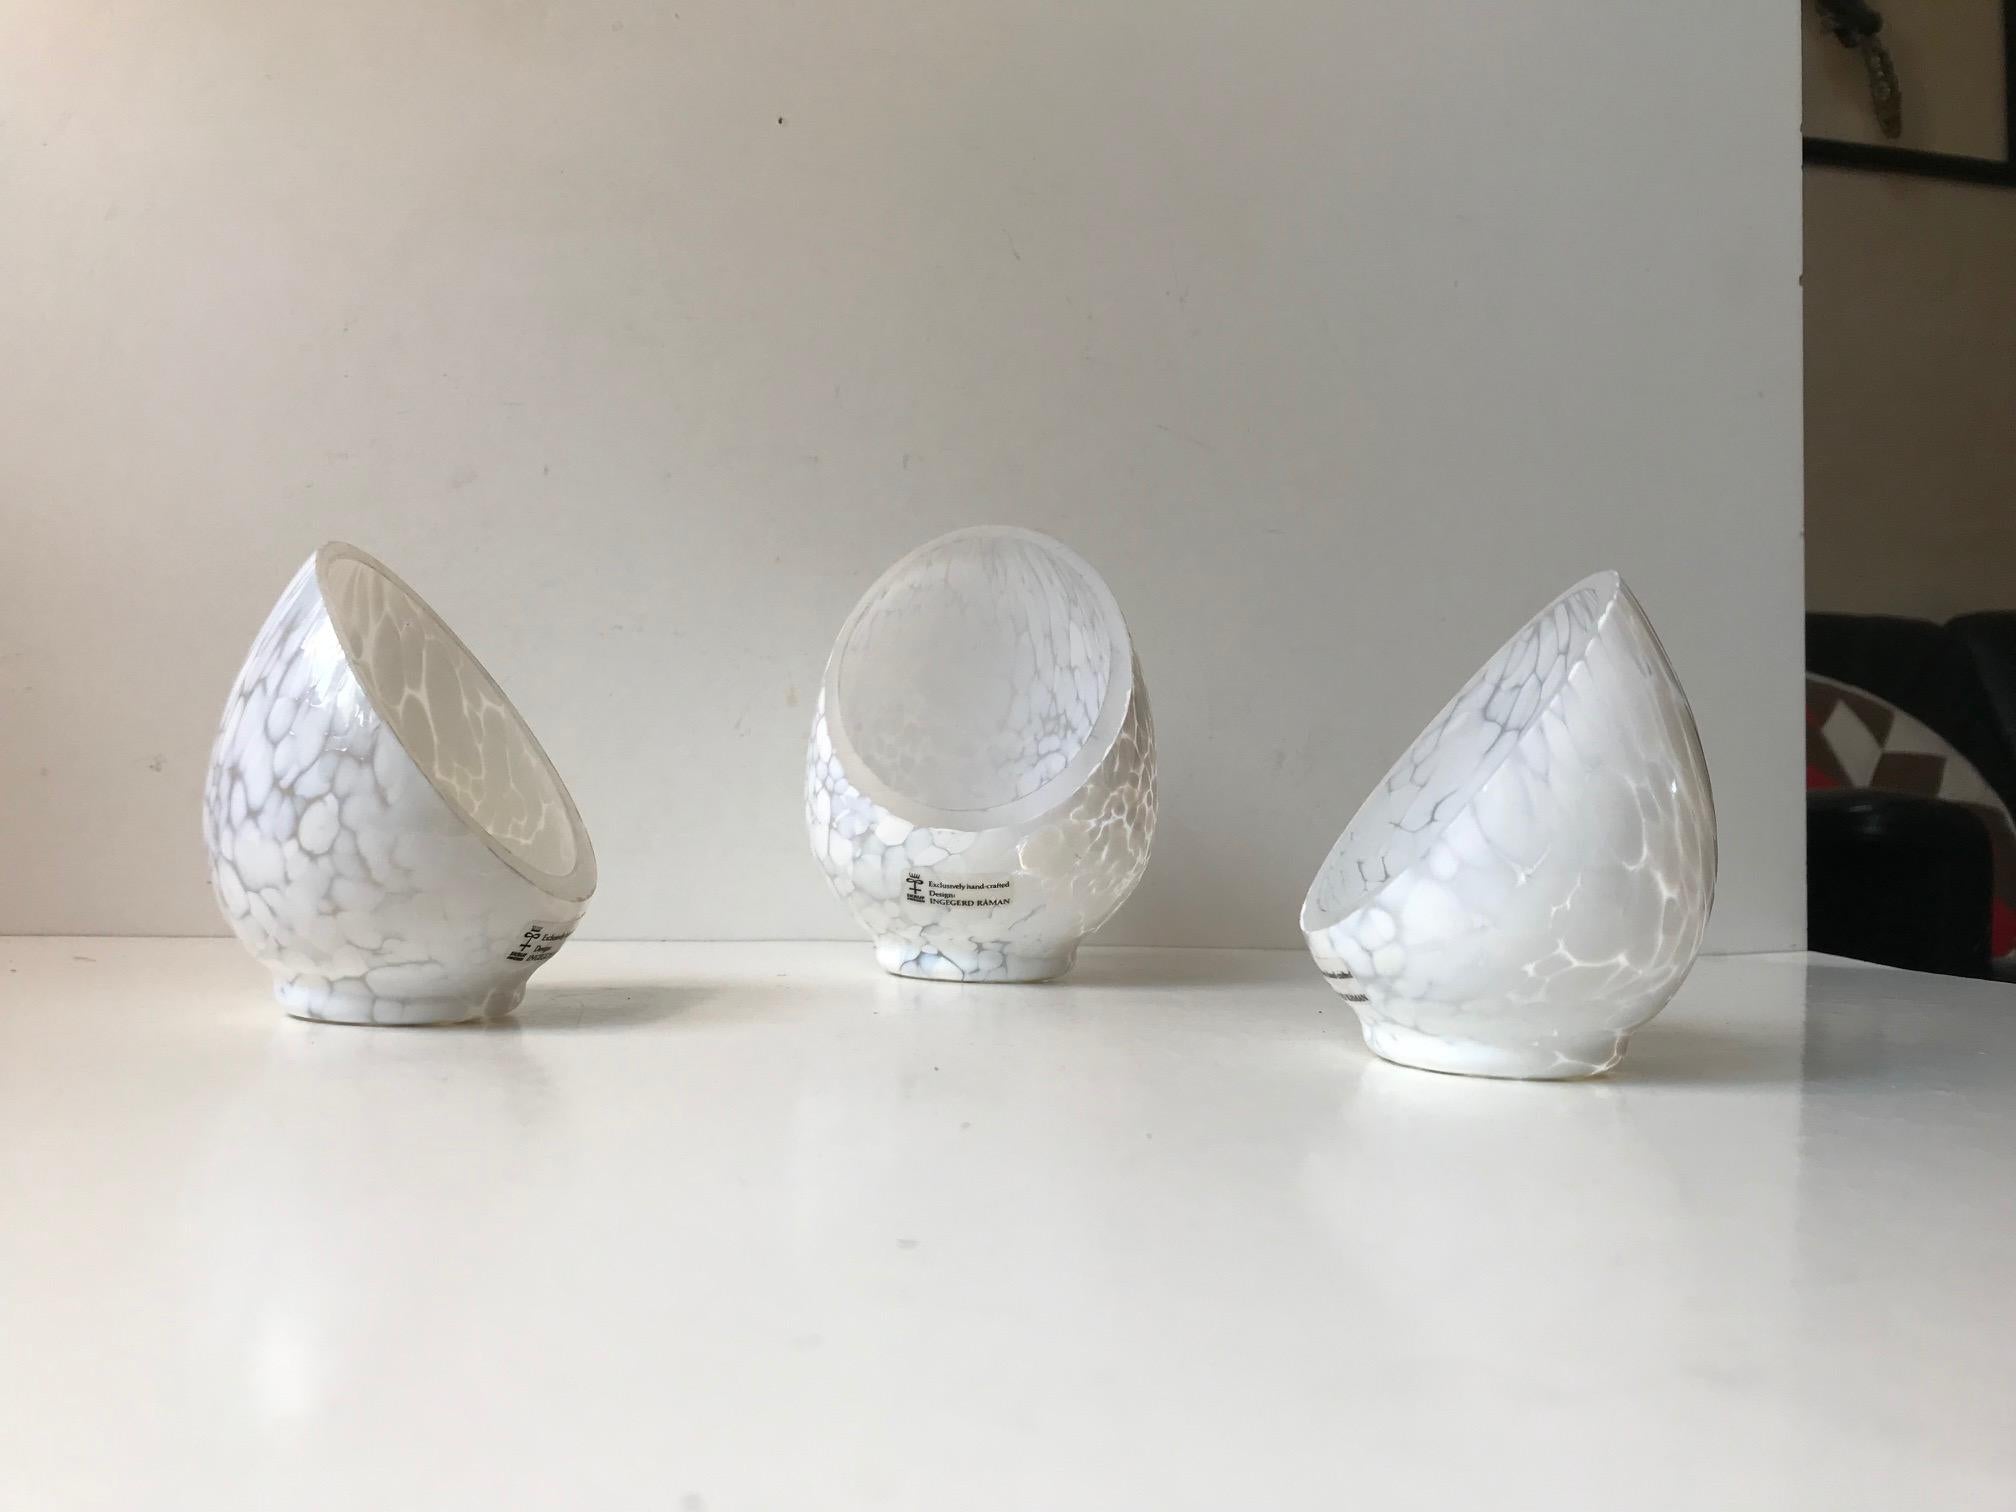 Modern Trio of Vintage Egg Shaped Blister Glass Candleholders by Ingegerd Råman